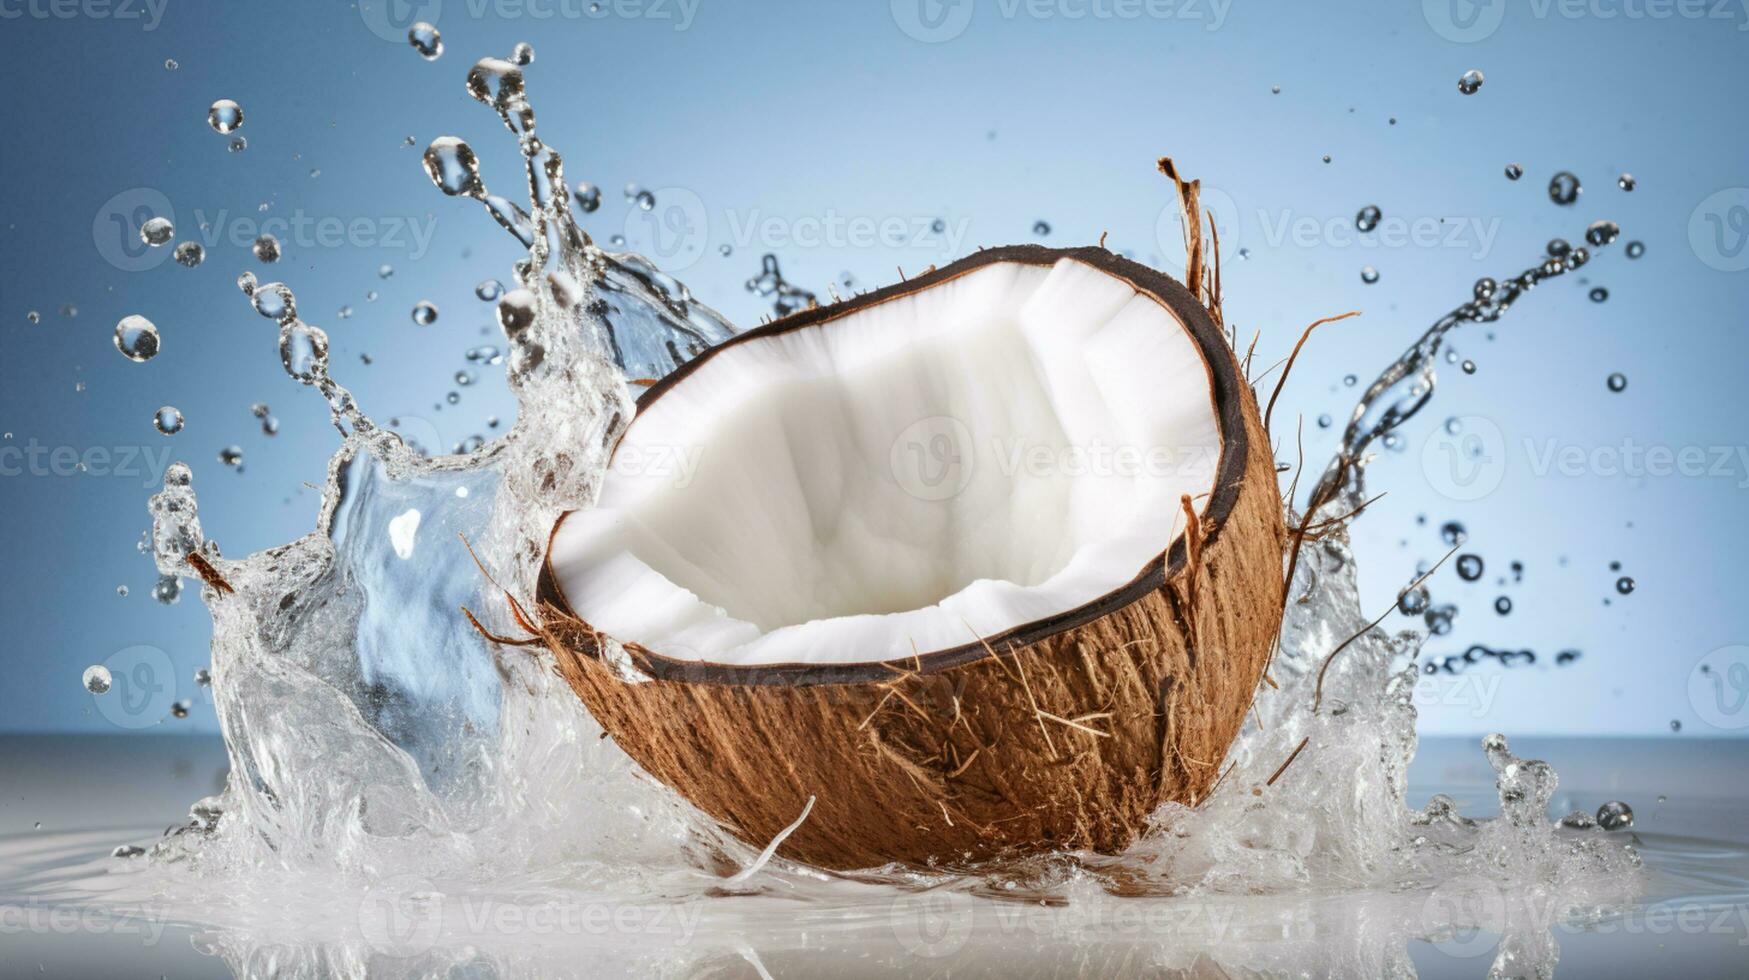 mitades de un Coco con agua chapoteo aislado en fondo, sano tropical alimento., ai generativo foto